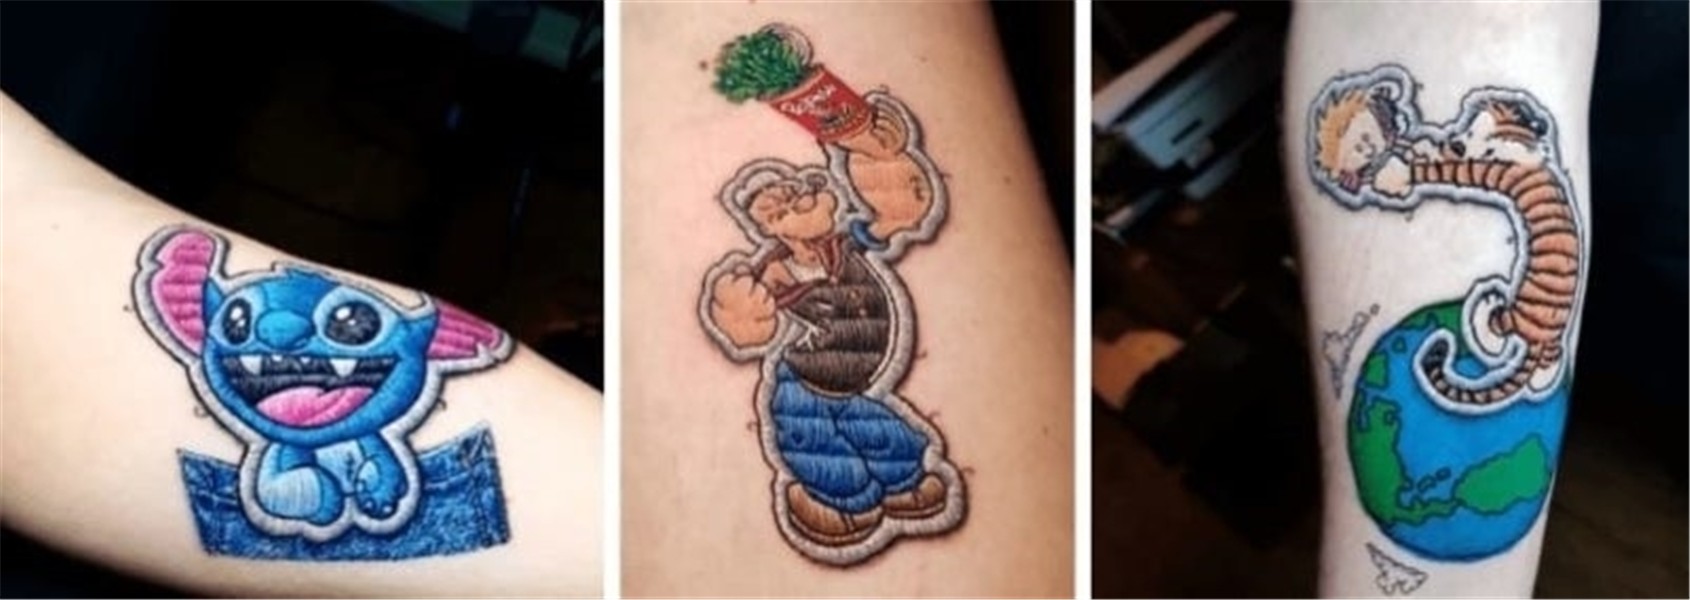 Patch Tattoo: Tatuajes increíbles bordados sobre la piel - M